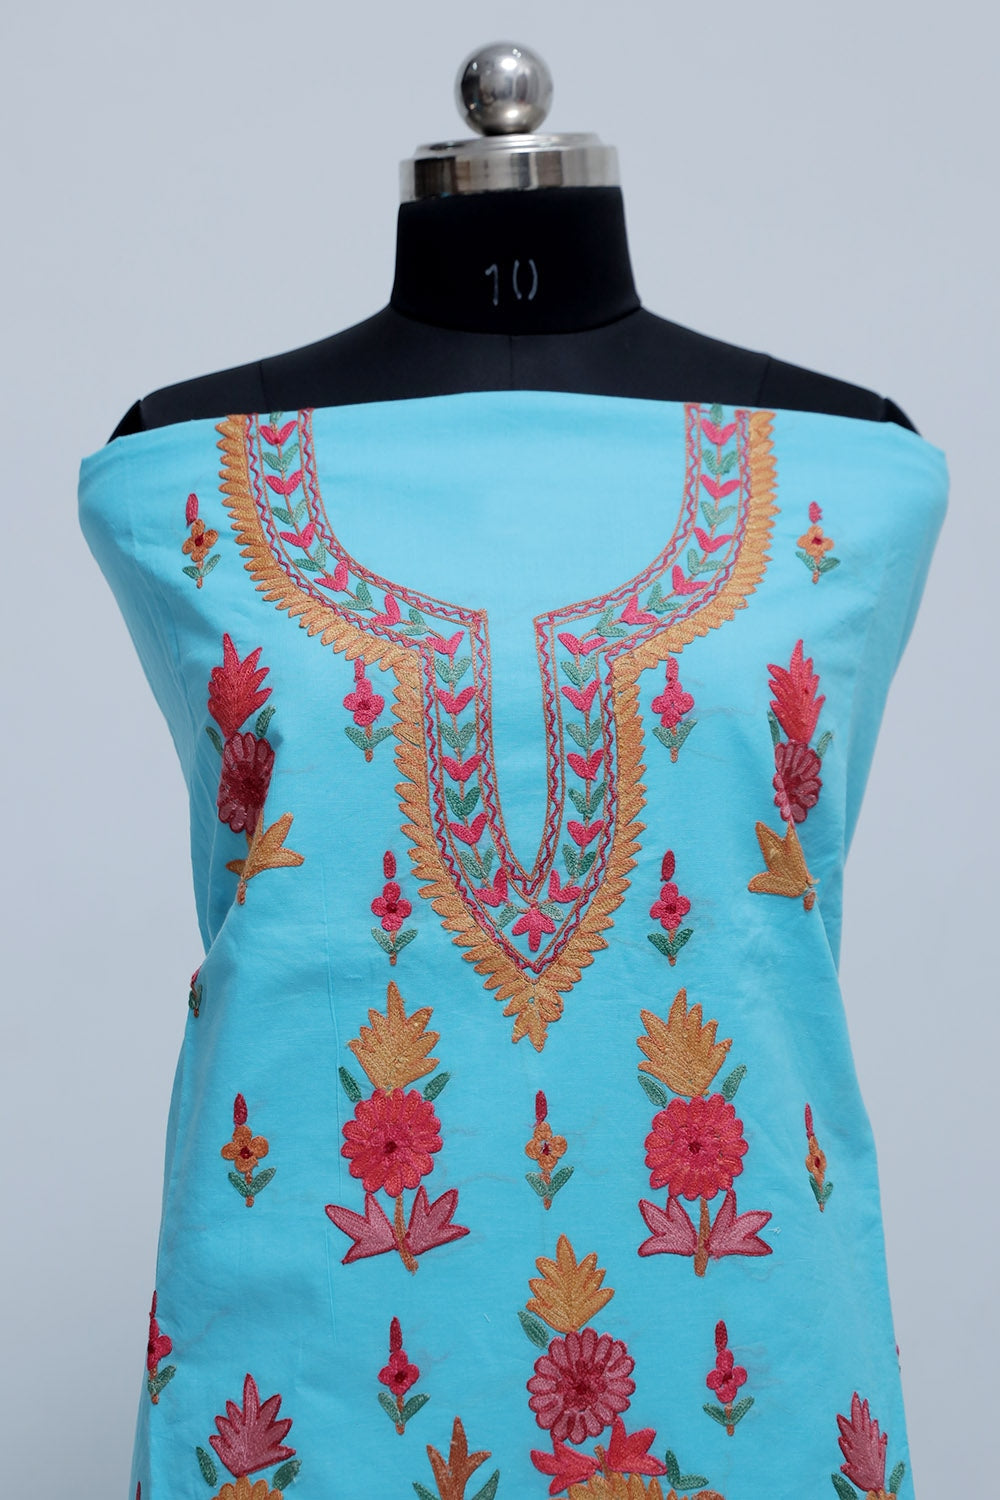 Blue Colour Designer Aari Work Suit With Floral Motif